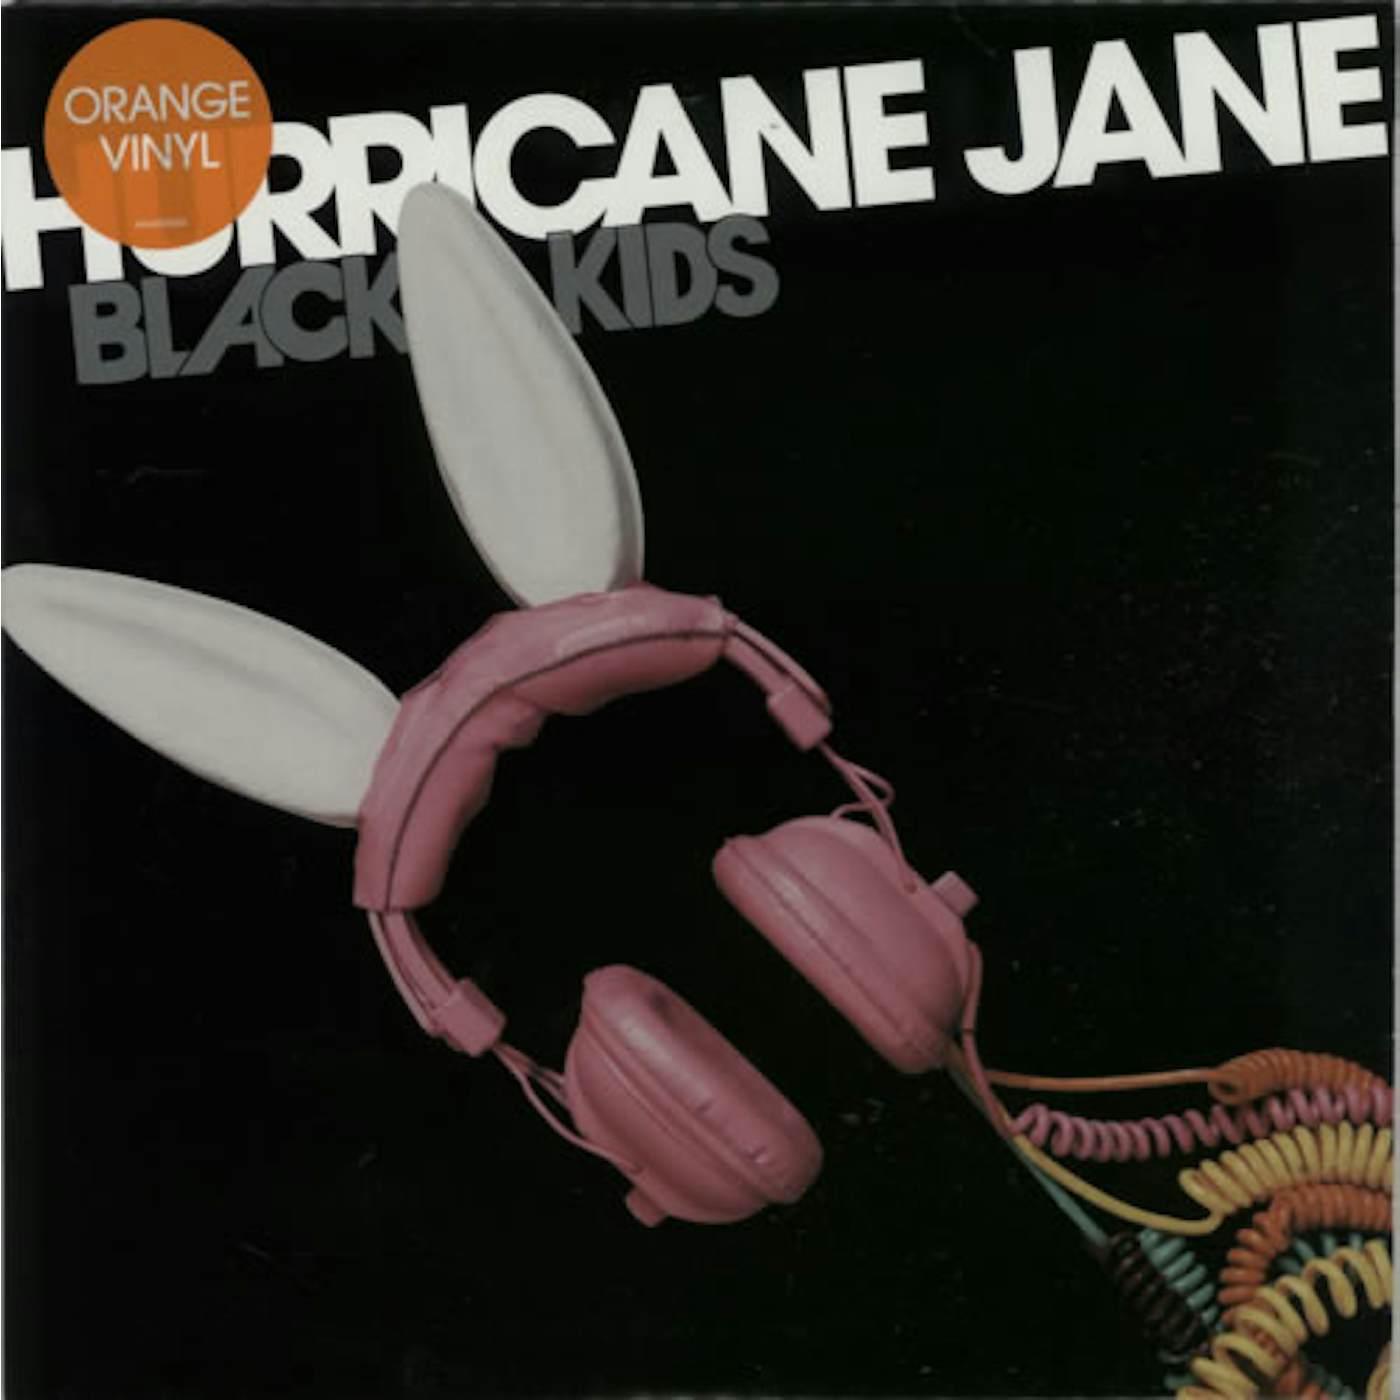 Black Kids HURRICANE JANE 1 Vinyl Record